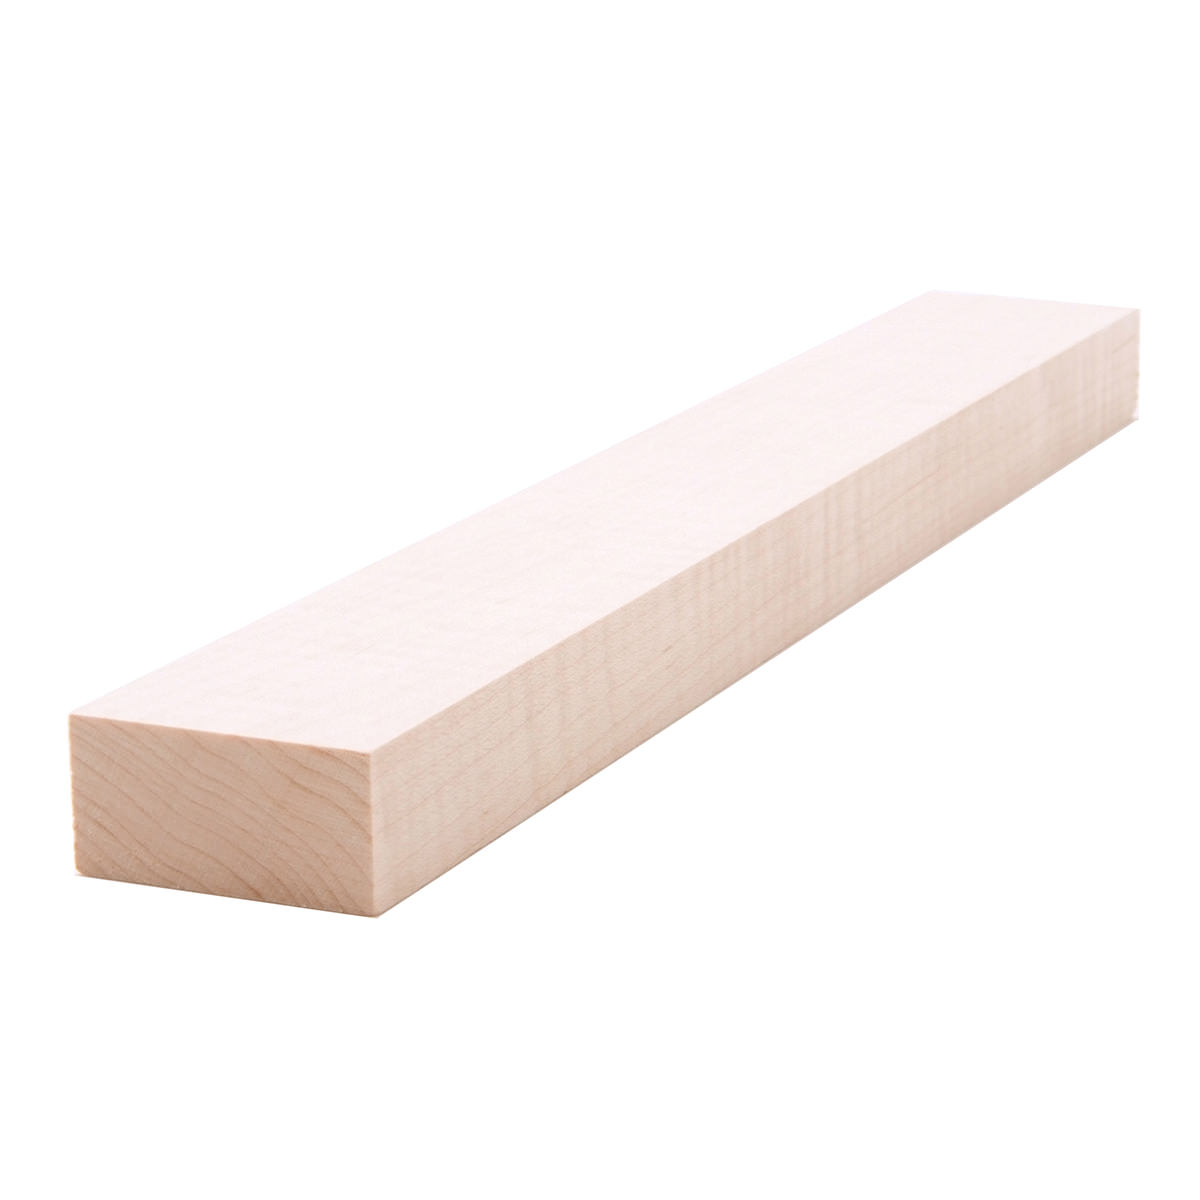 1x2 (3/4" x 11/2") Hard Maple S4S Lumber, Boards, & Flat